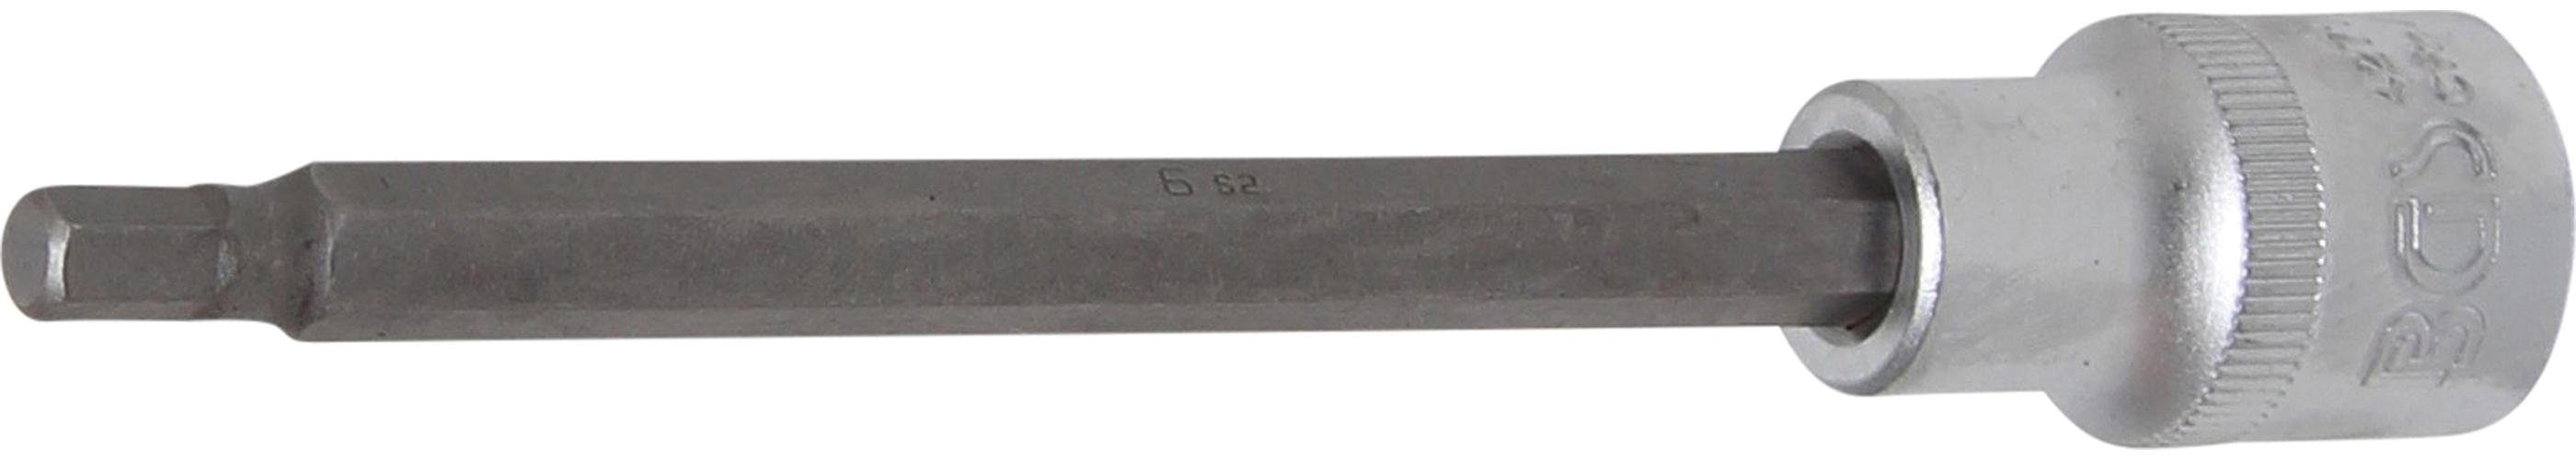 BGS 6 140 Innenvierkant mm (1/2), Sechskant-Bit mm, Innensechskant technic Bit-Einsatz, mm Länge 12,5 Antrieb